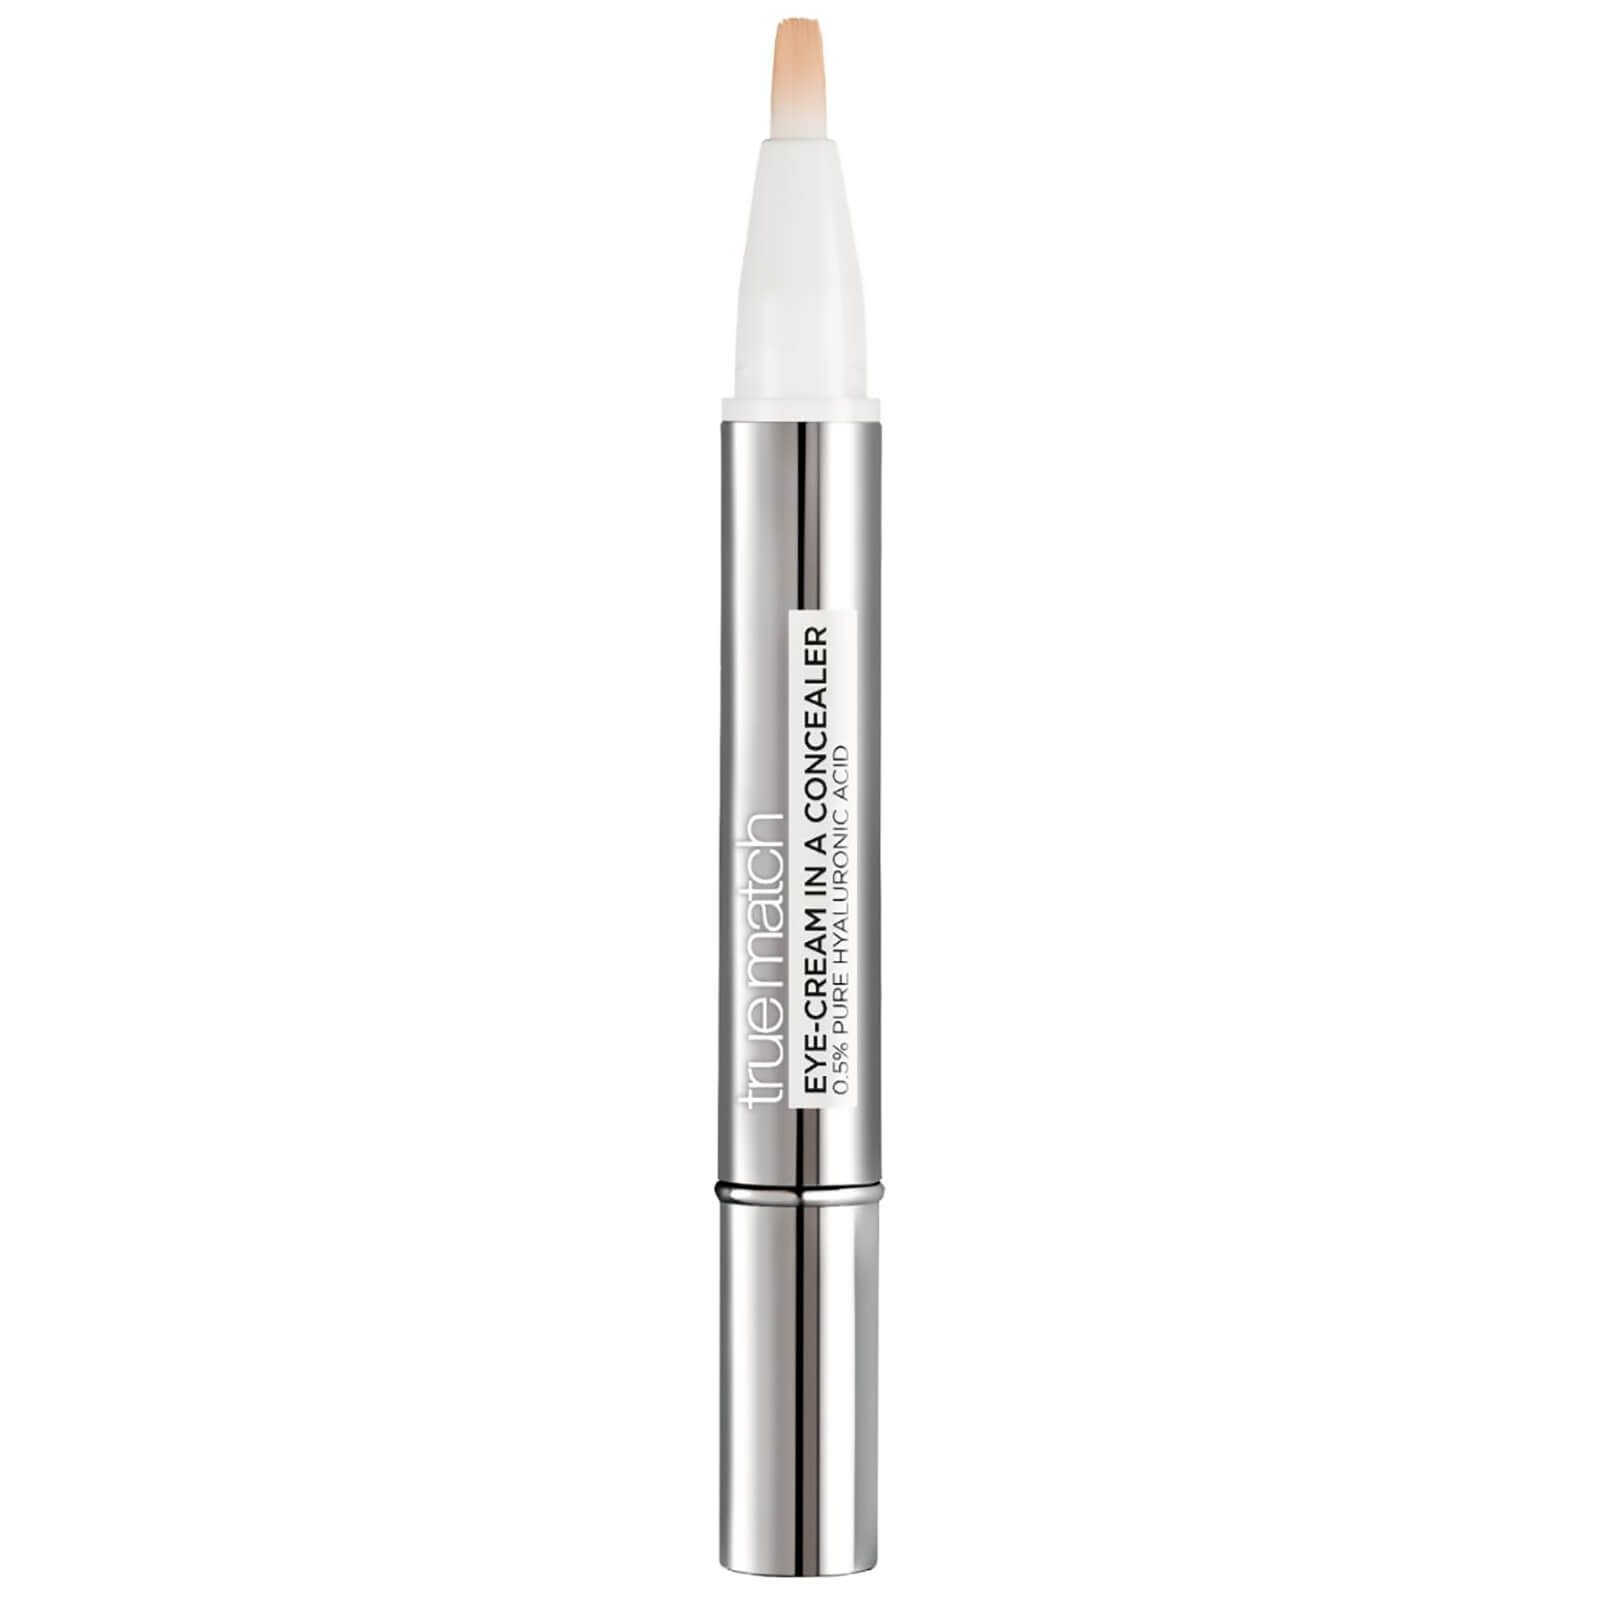 Image of L'Oréal Paris True Match Eye Cream in a Concealer SPF20 (Various Shades) - 3-5N Natural Beige